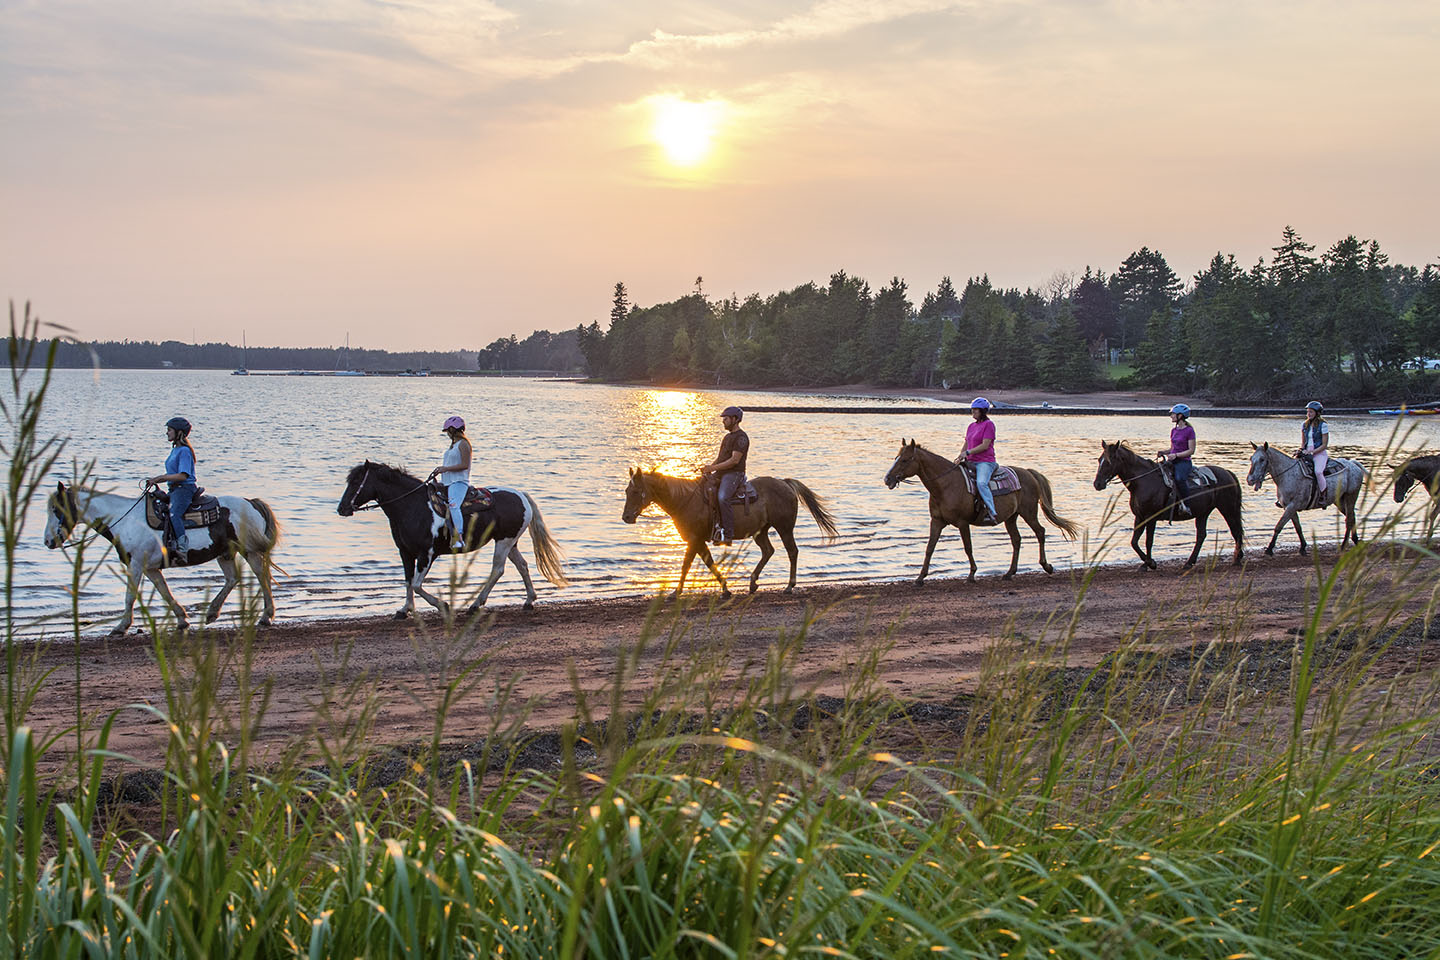 horseback riders along a beach at sunset